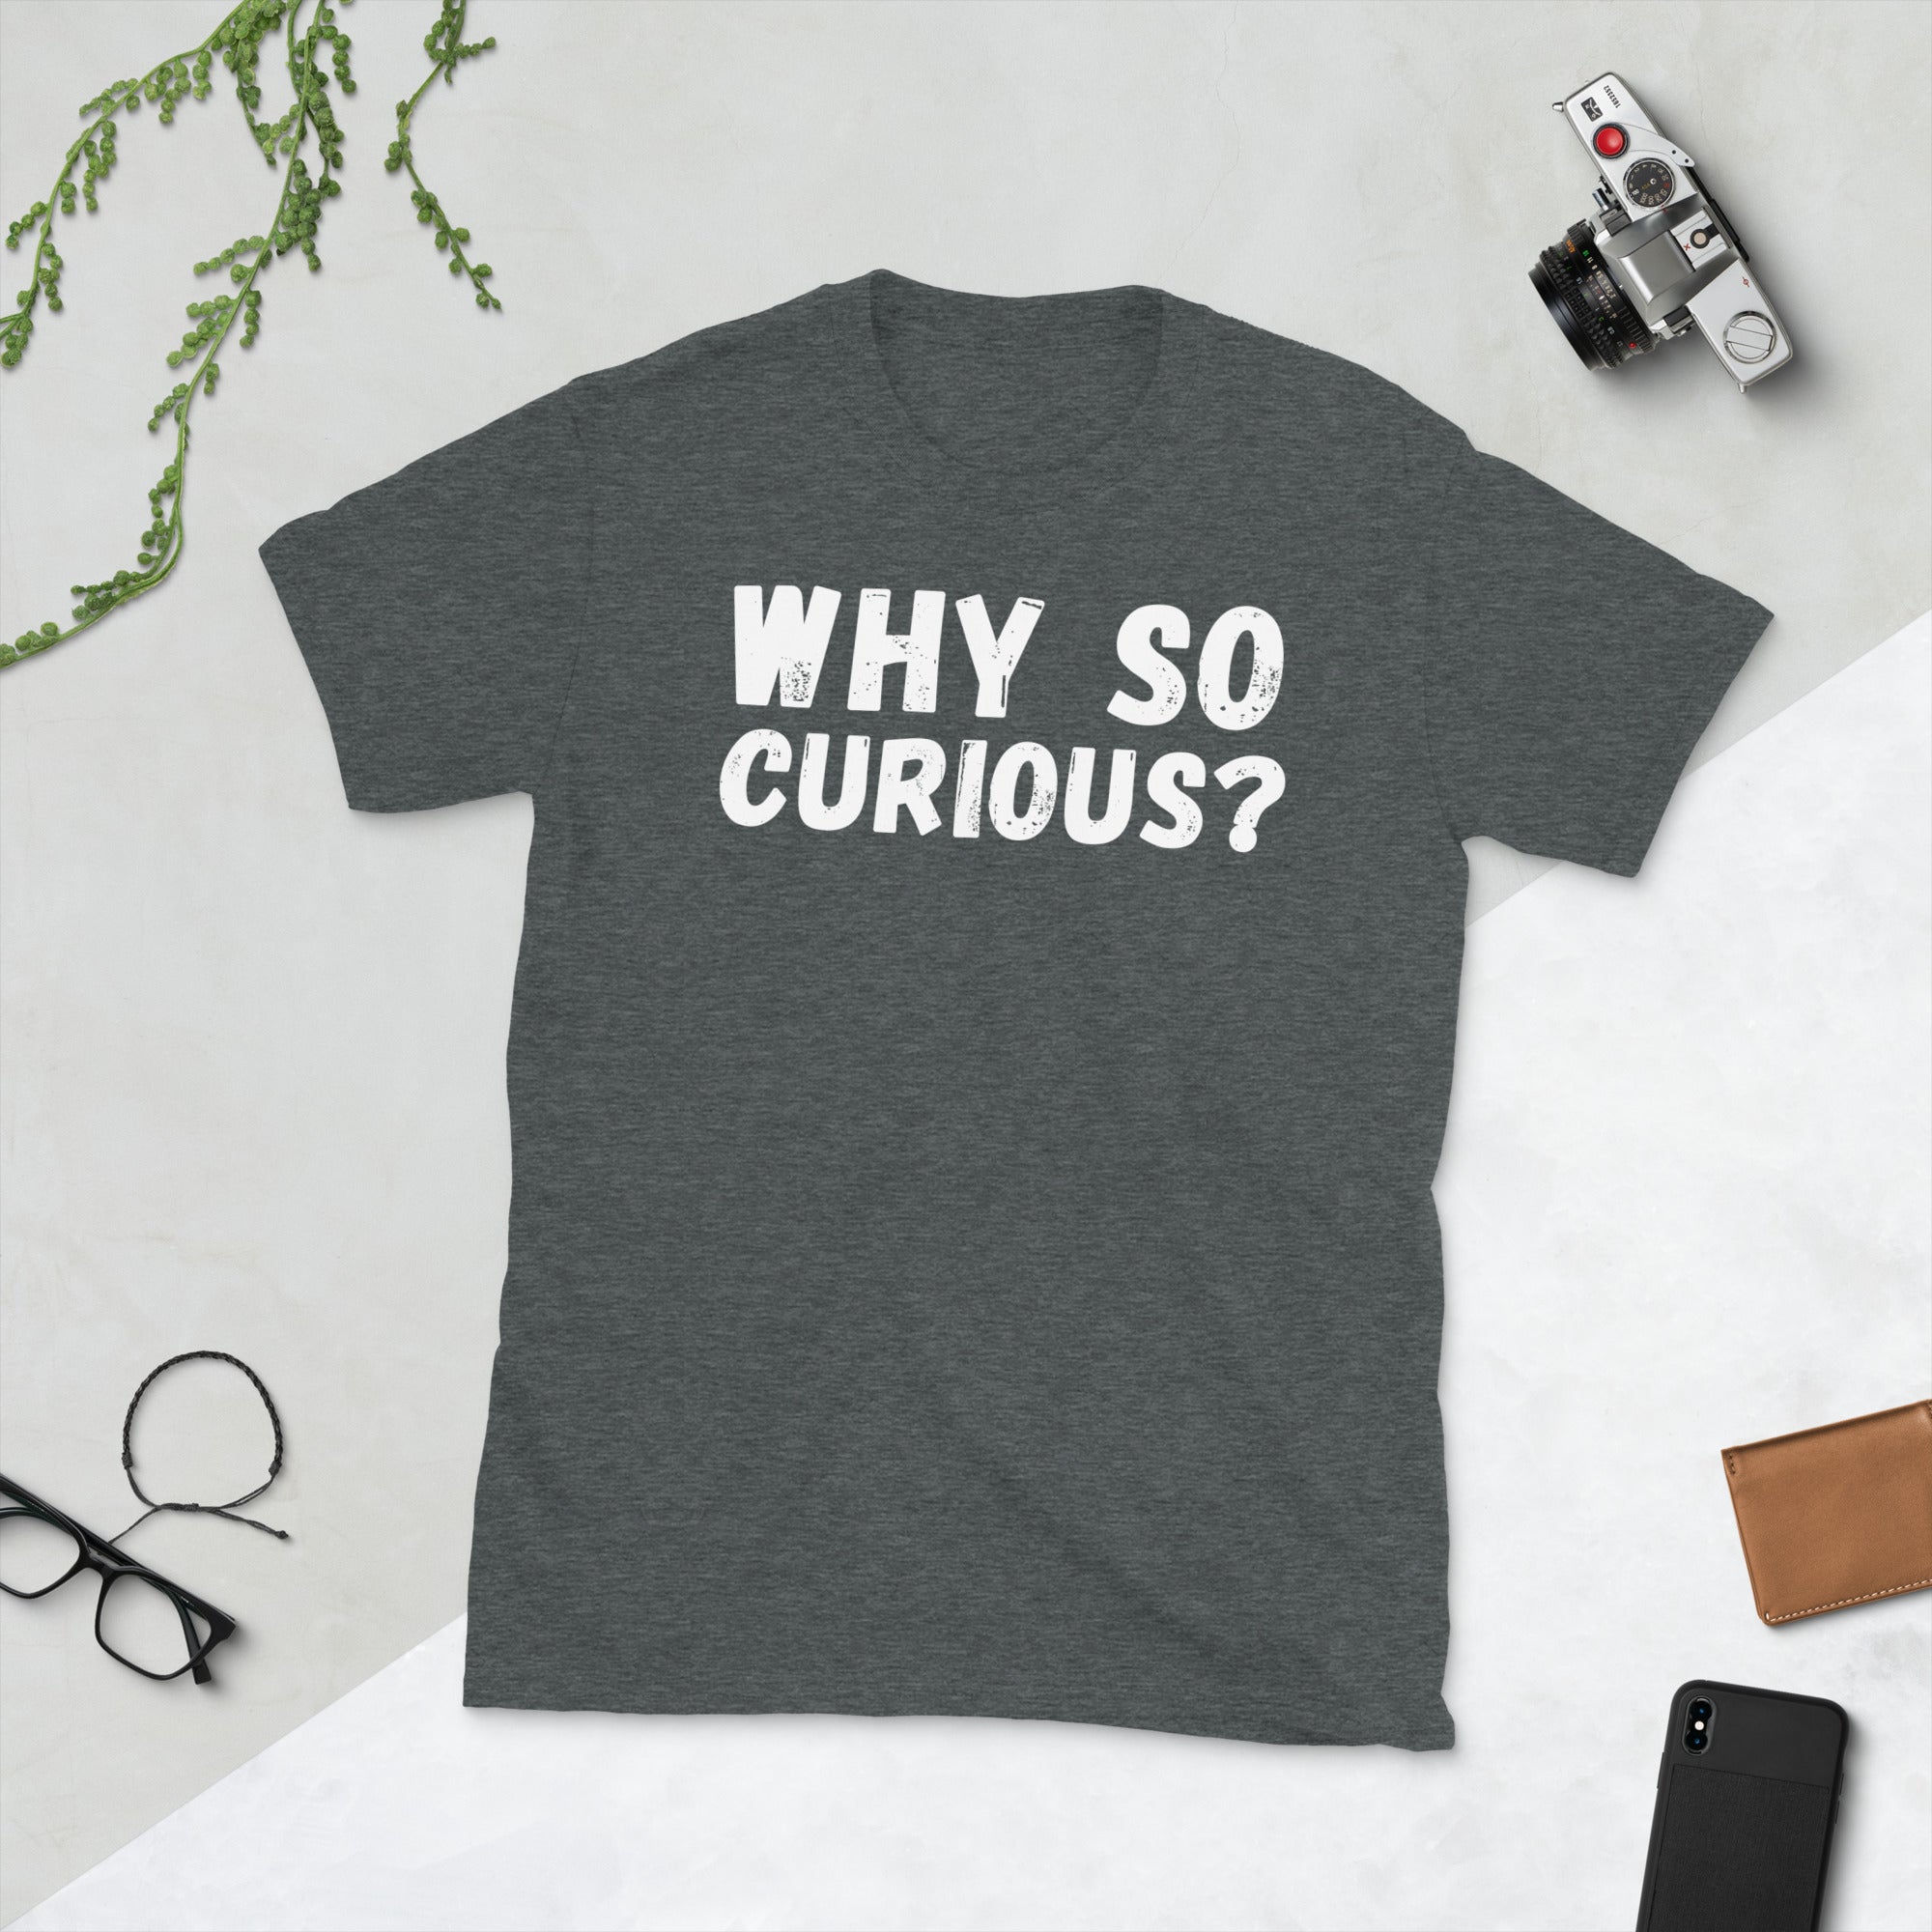 Warum so neugierig? T-Shirt, neugieriges Zitat, lustiges neugieriges Meme-T-Shirt